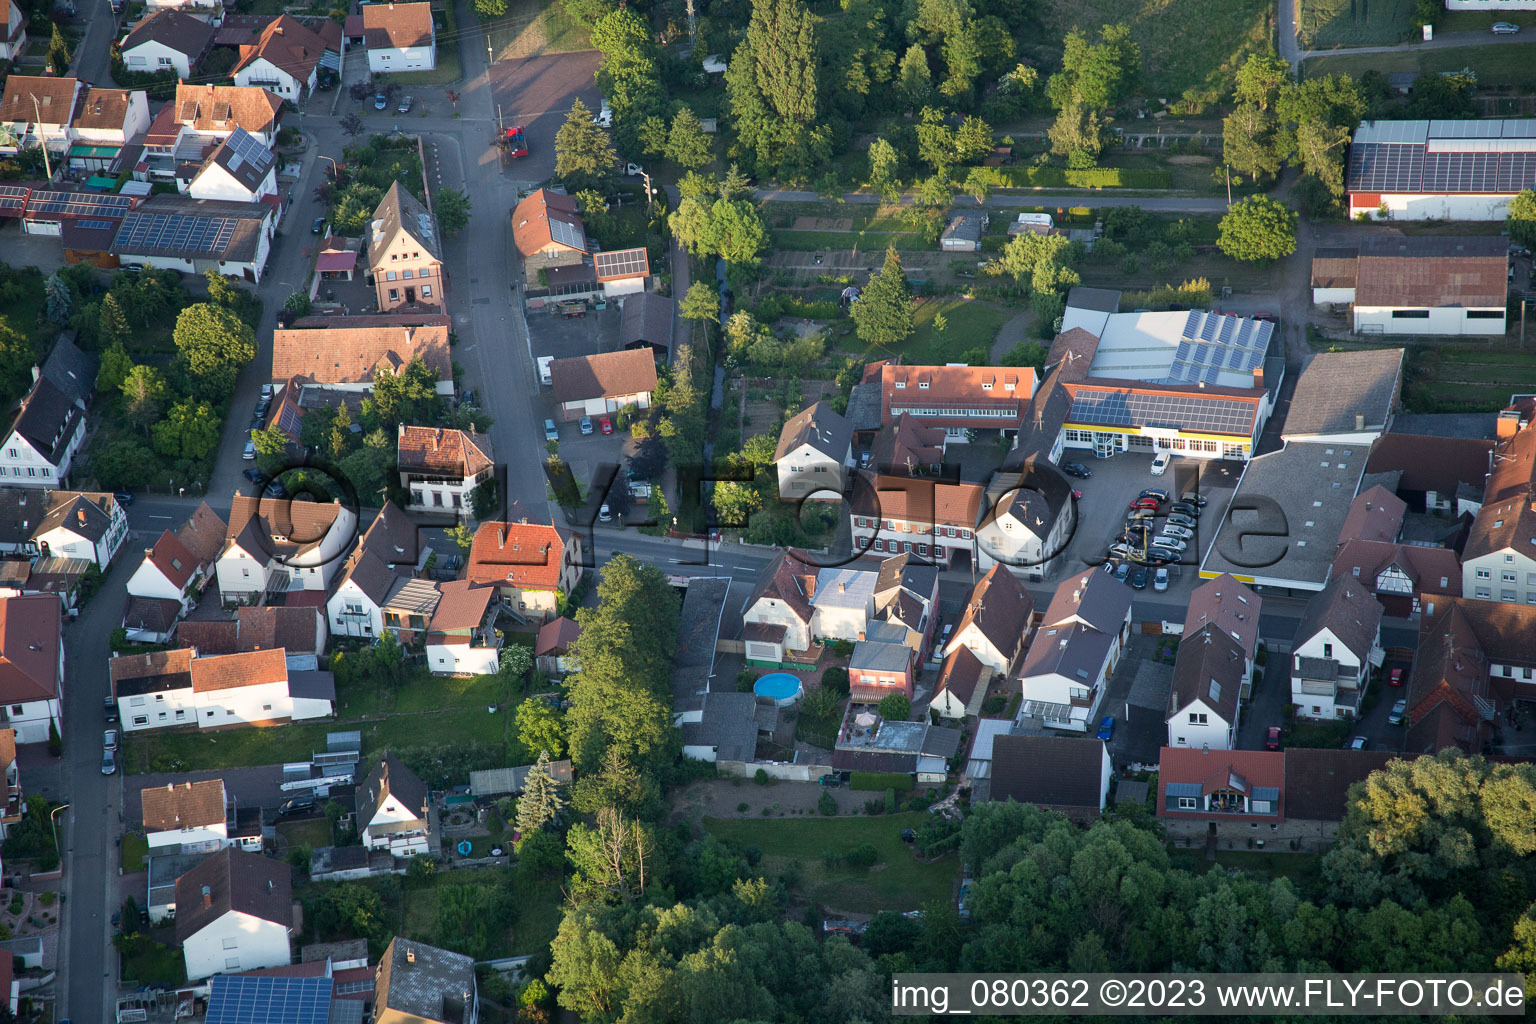 Quartier Ingenheim in Billigheim-Ingenheim dans le département Rhénanie-Palatinat, Allemagne vue d'en haut